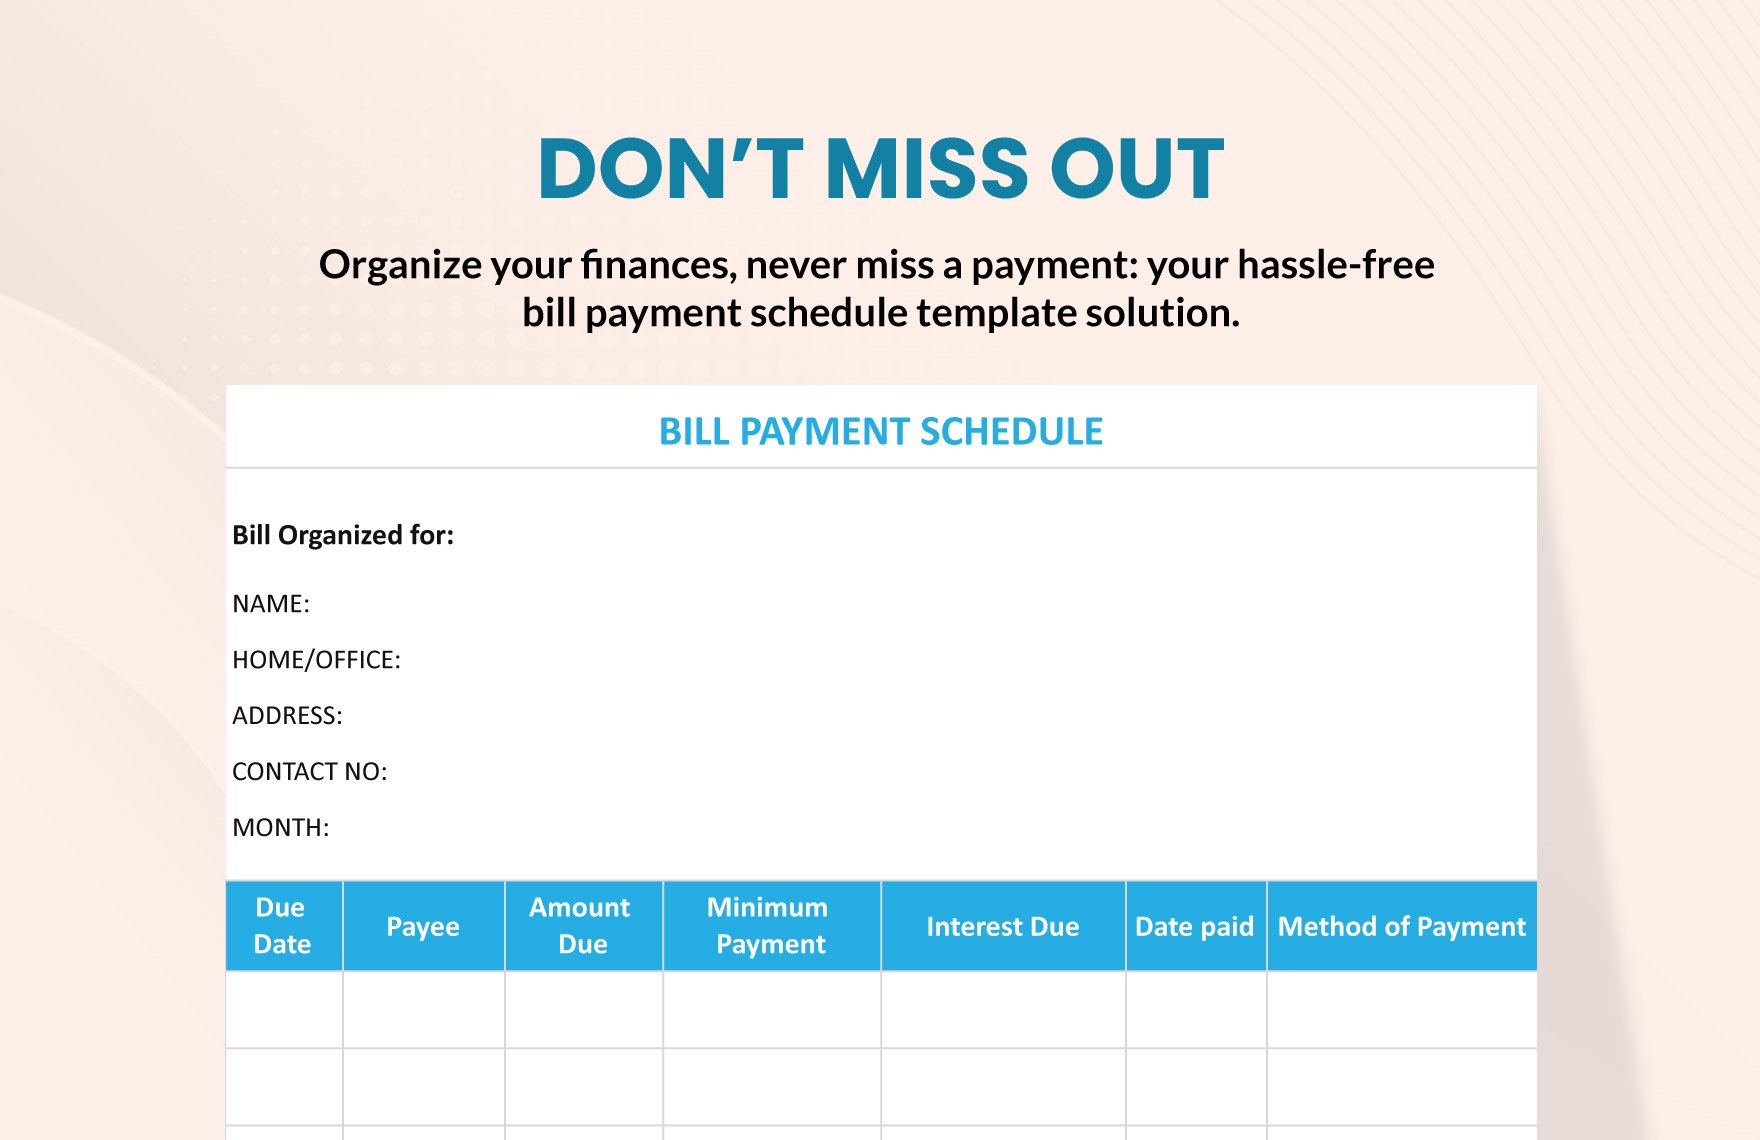 Bill Payment Schedule